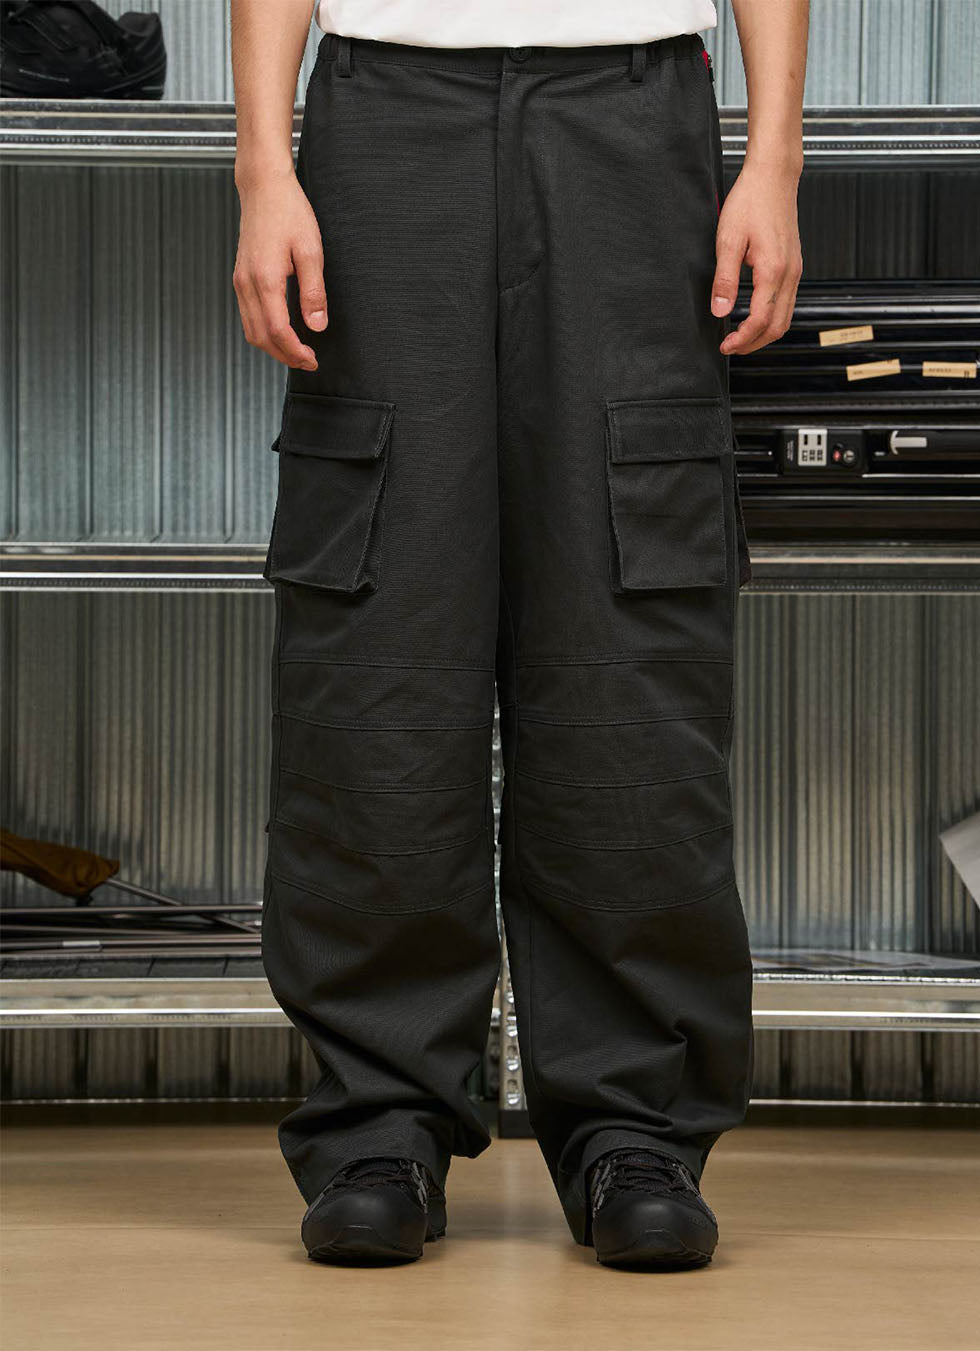 Multi-pocket cargo pants with contrast zipper